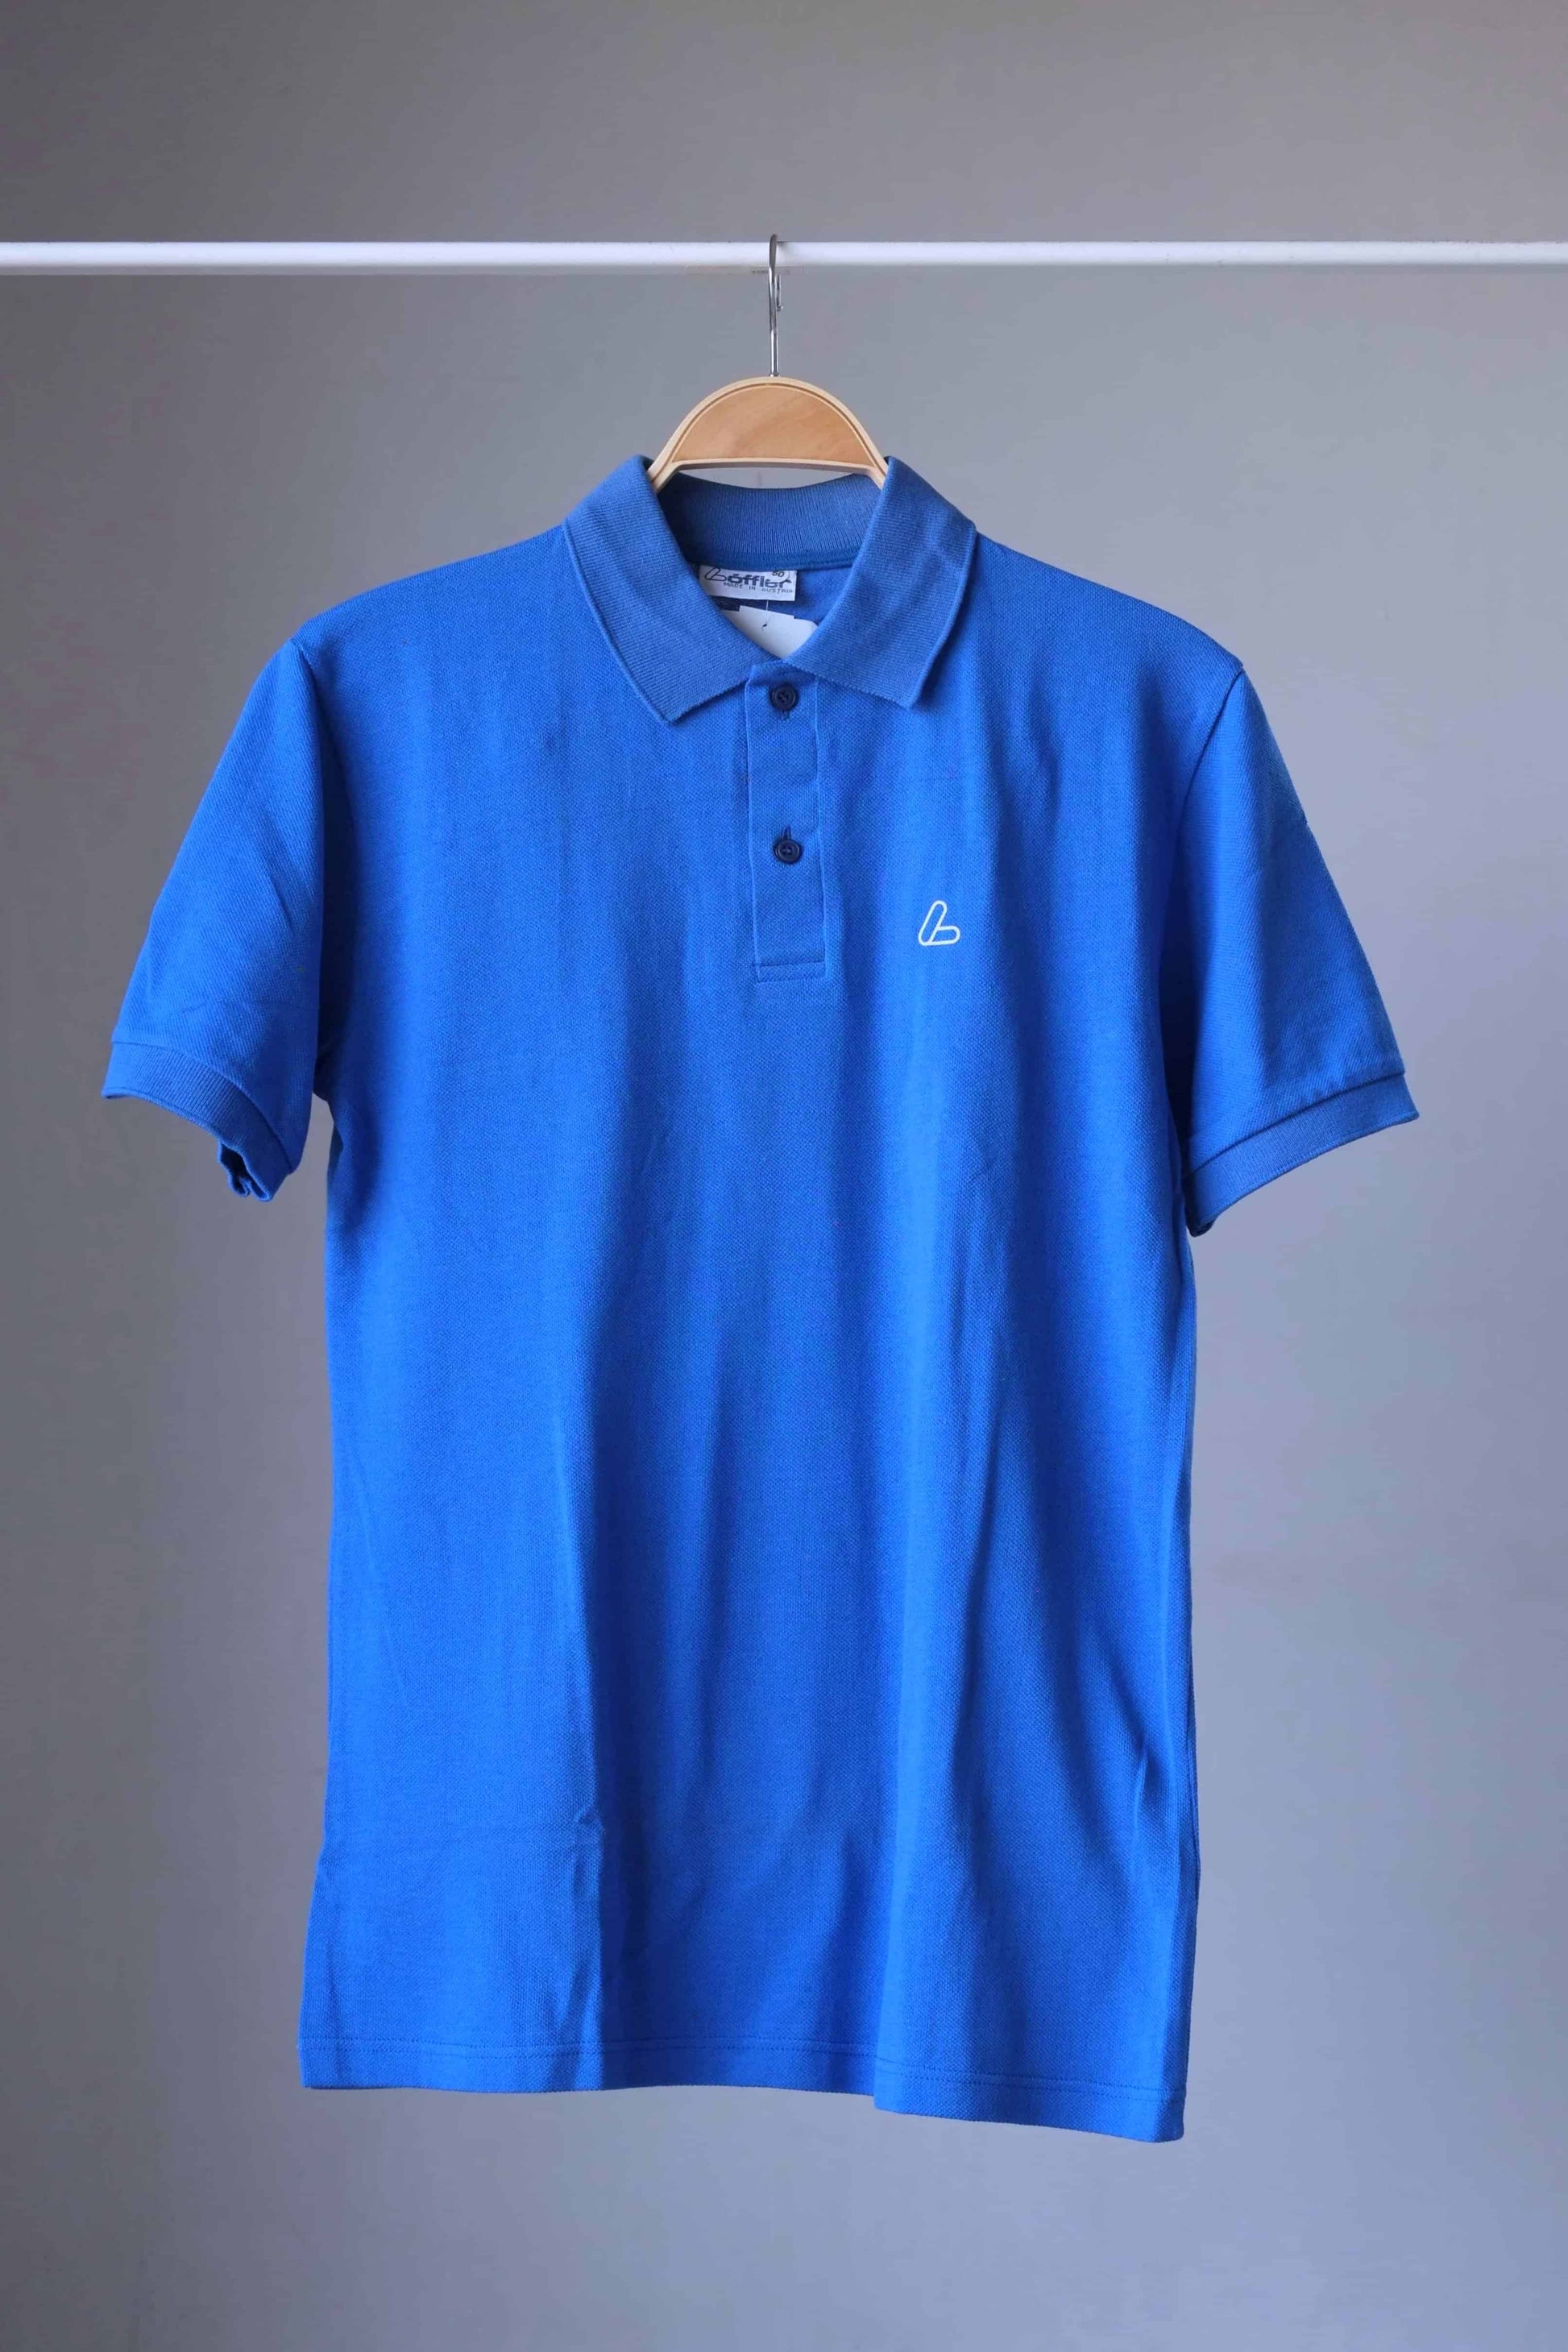 LÖFFLER Classic Polo Shirt royal blue